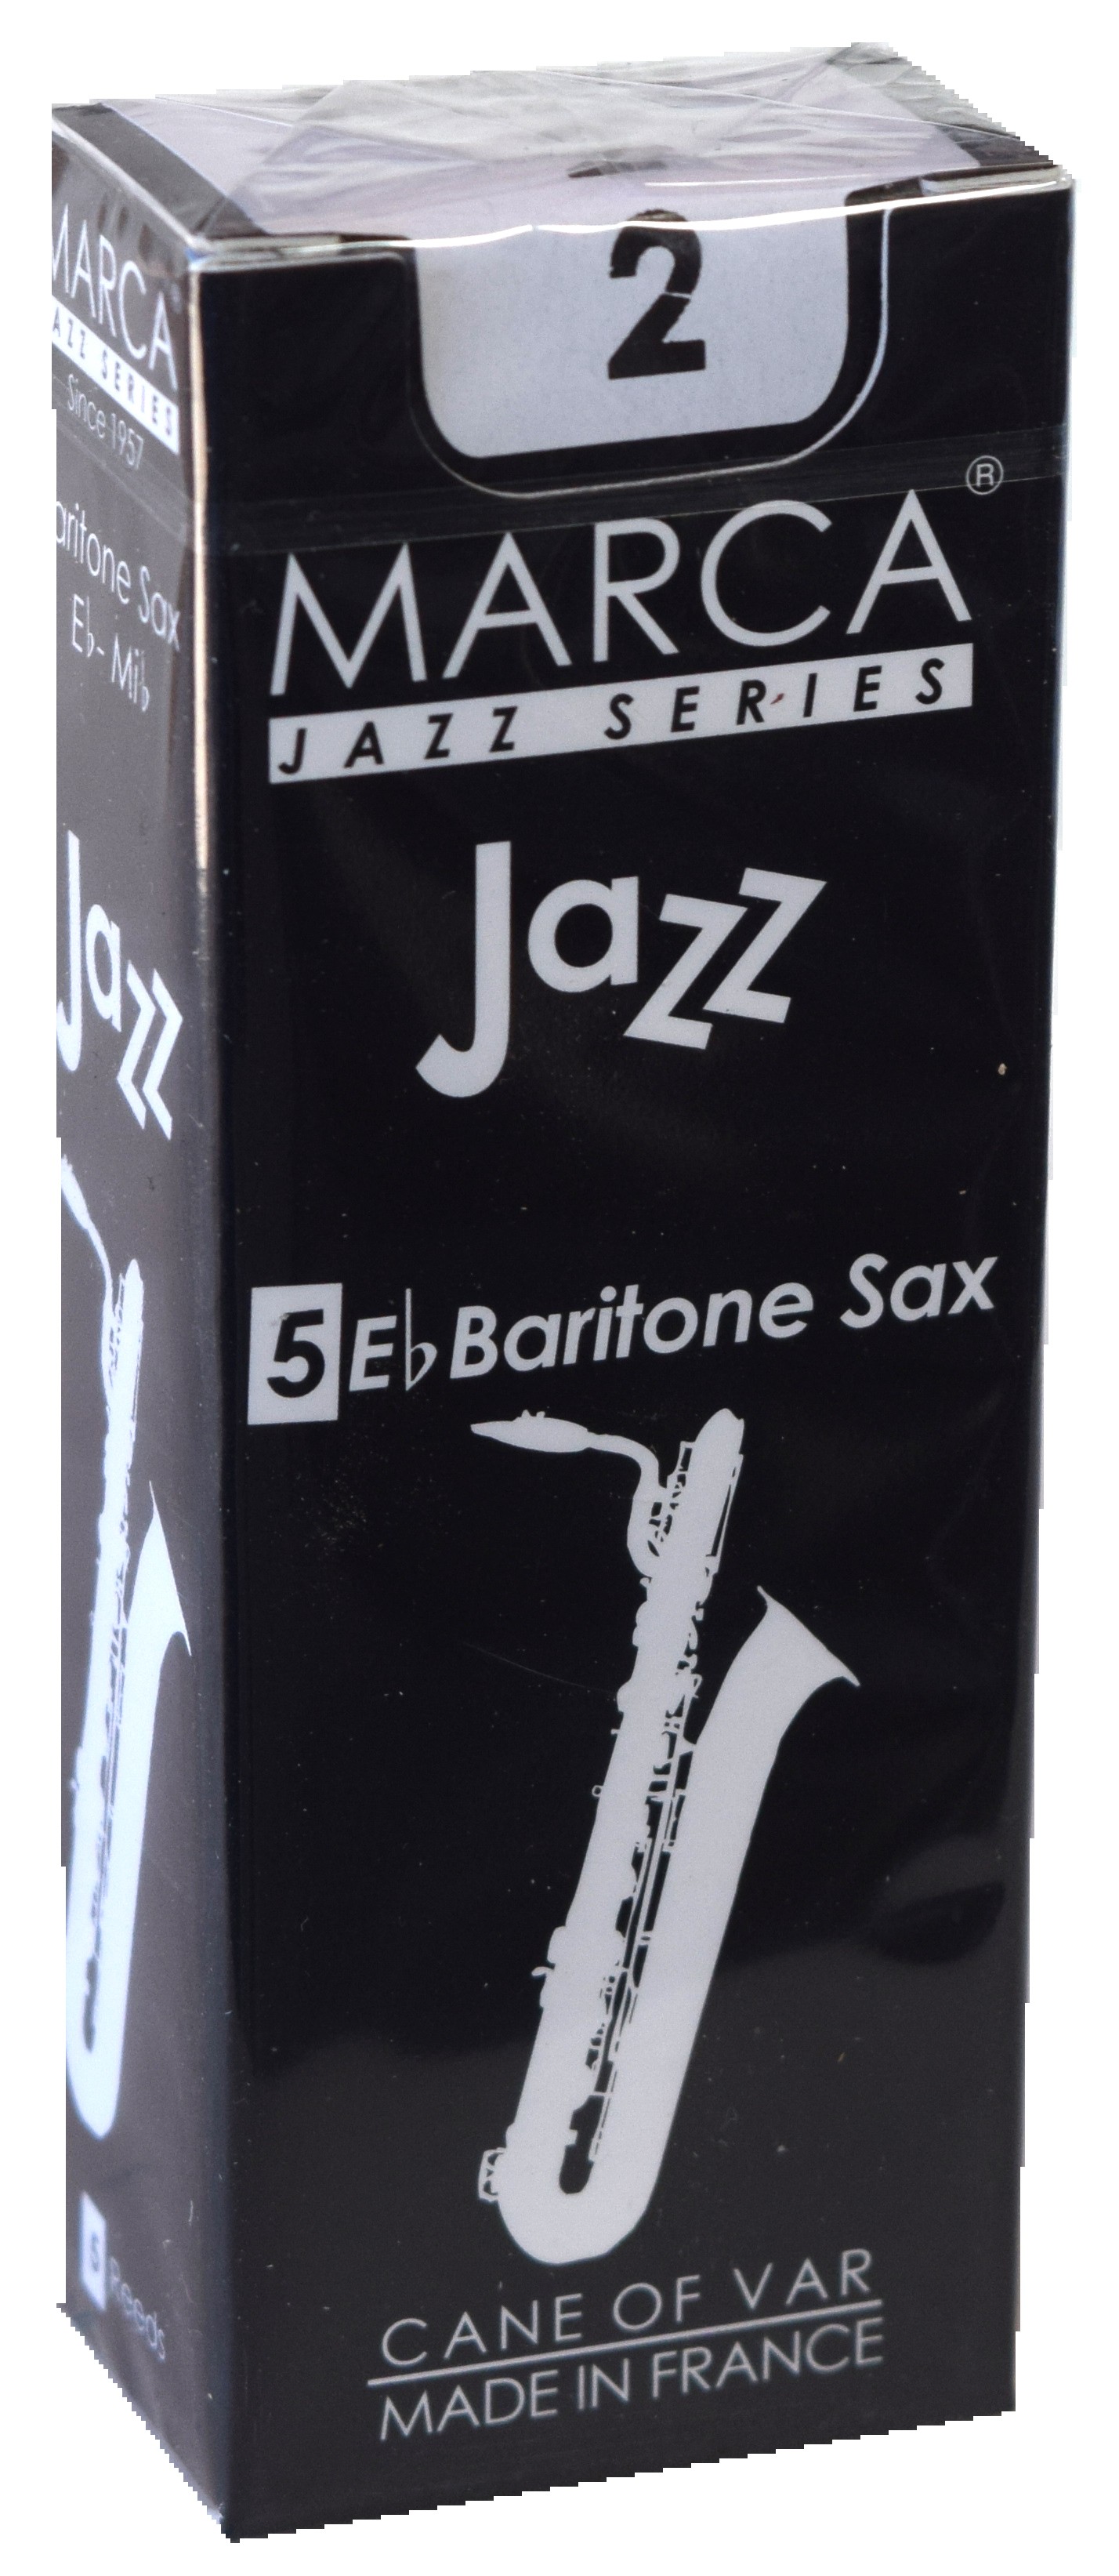 Marca Jazz Series - Baritone Saxophone Reeds (Box of 5) - 2